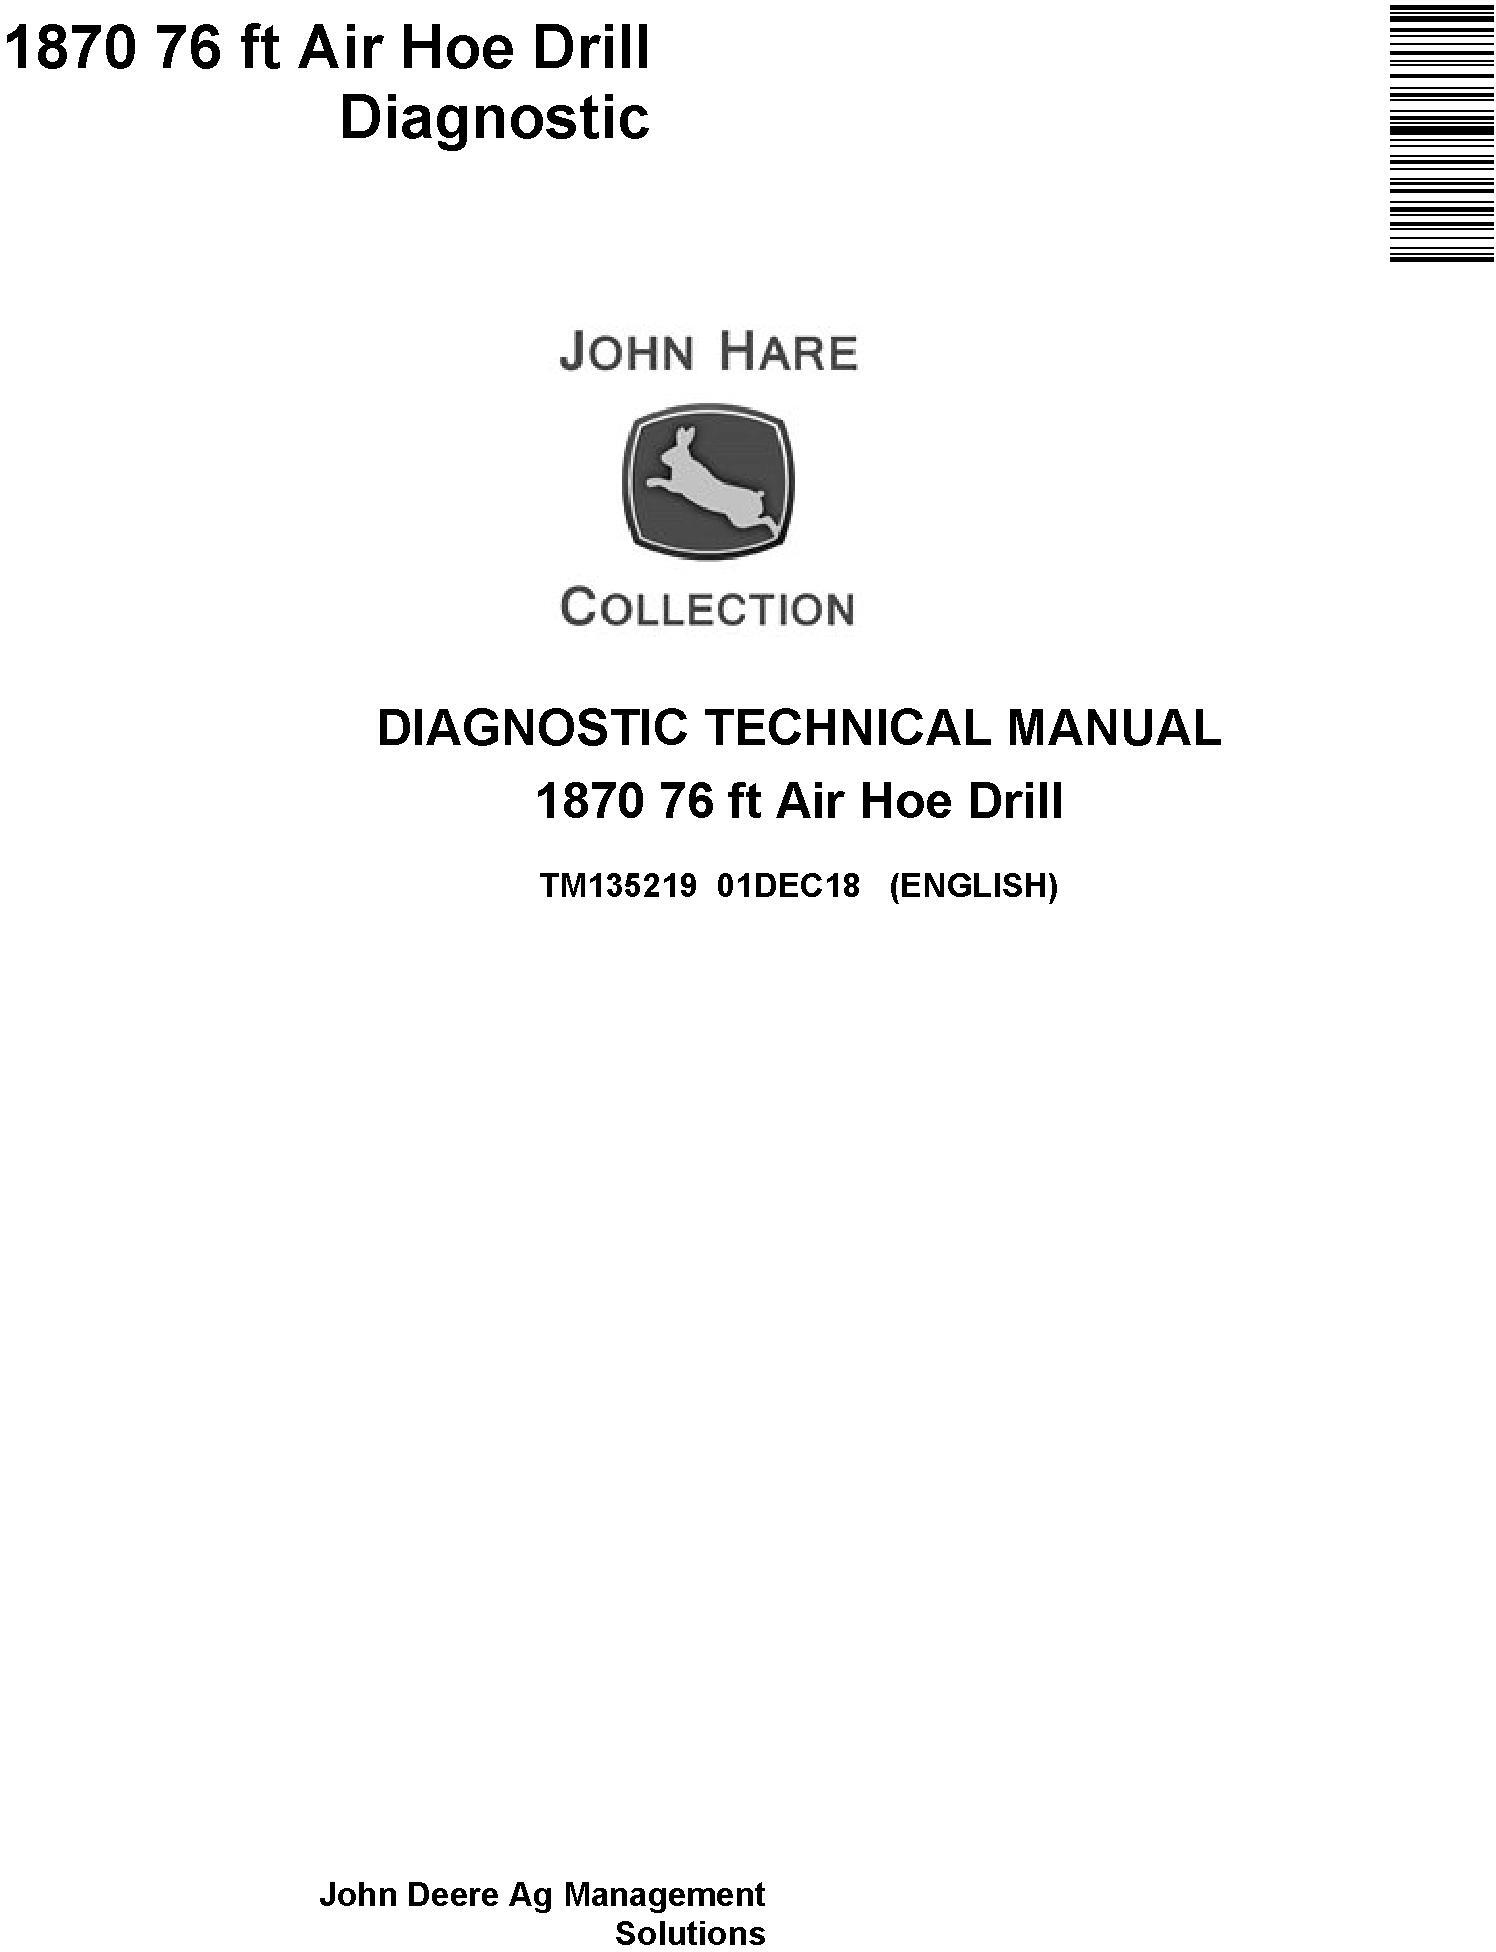 John Deere 1870 76 ft Air Hoe Drill Diagnostic Technical Manual TM135219